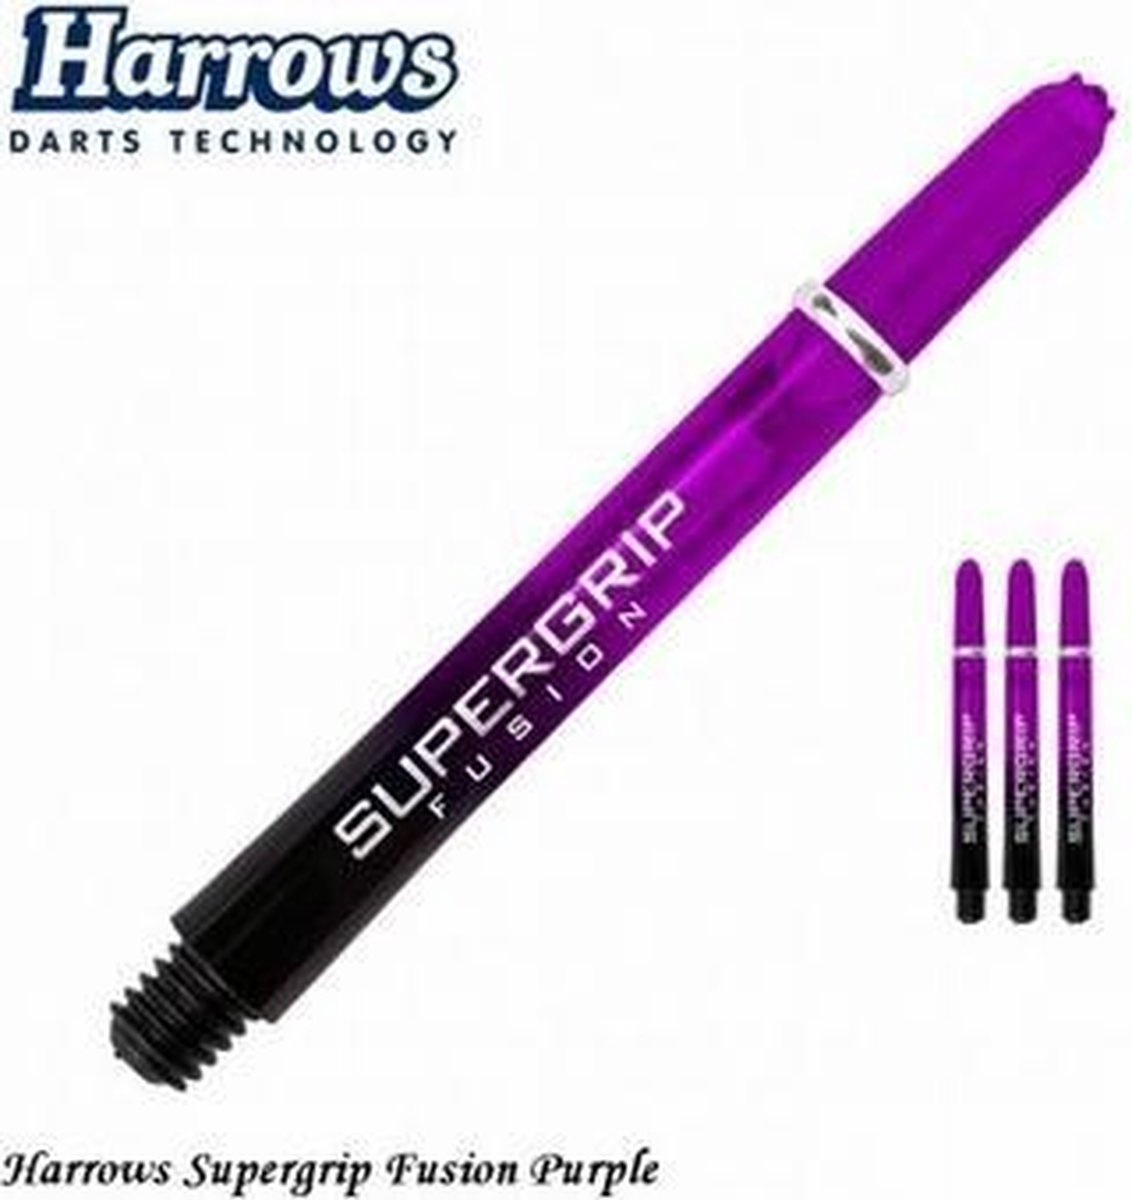 Harrows Supergrip Fusion Black / Purple - Short